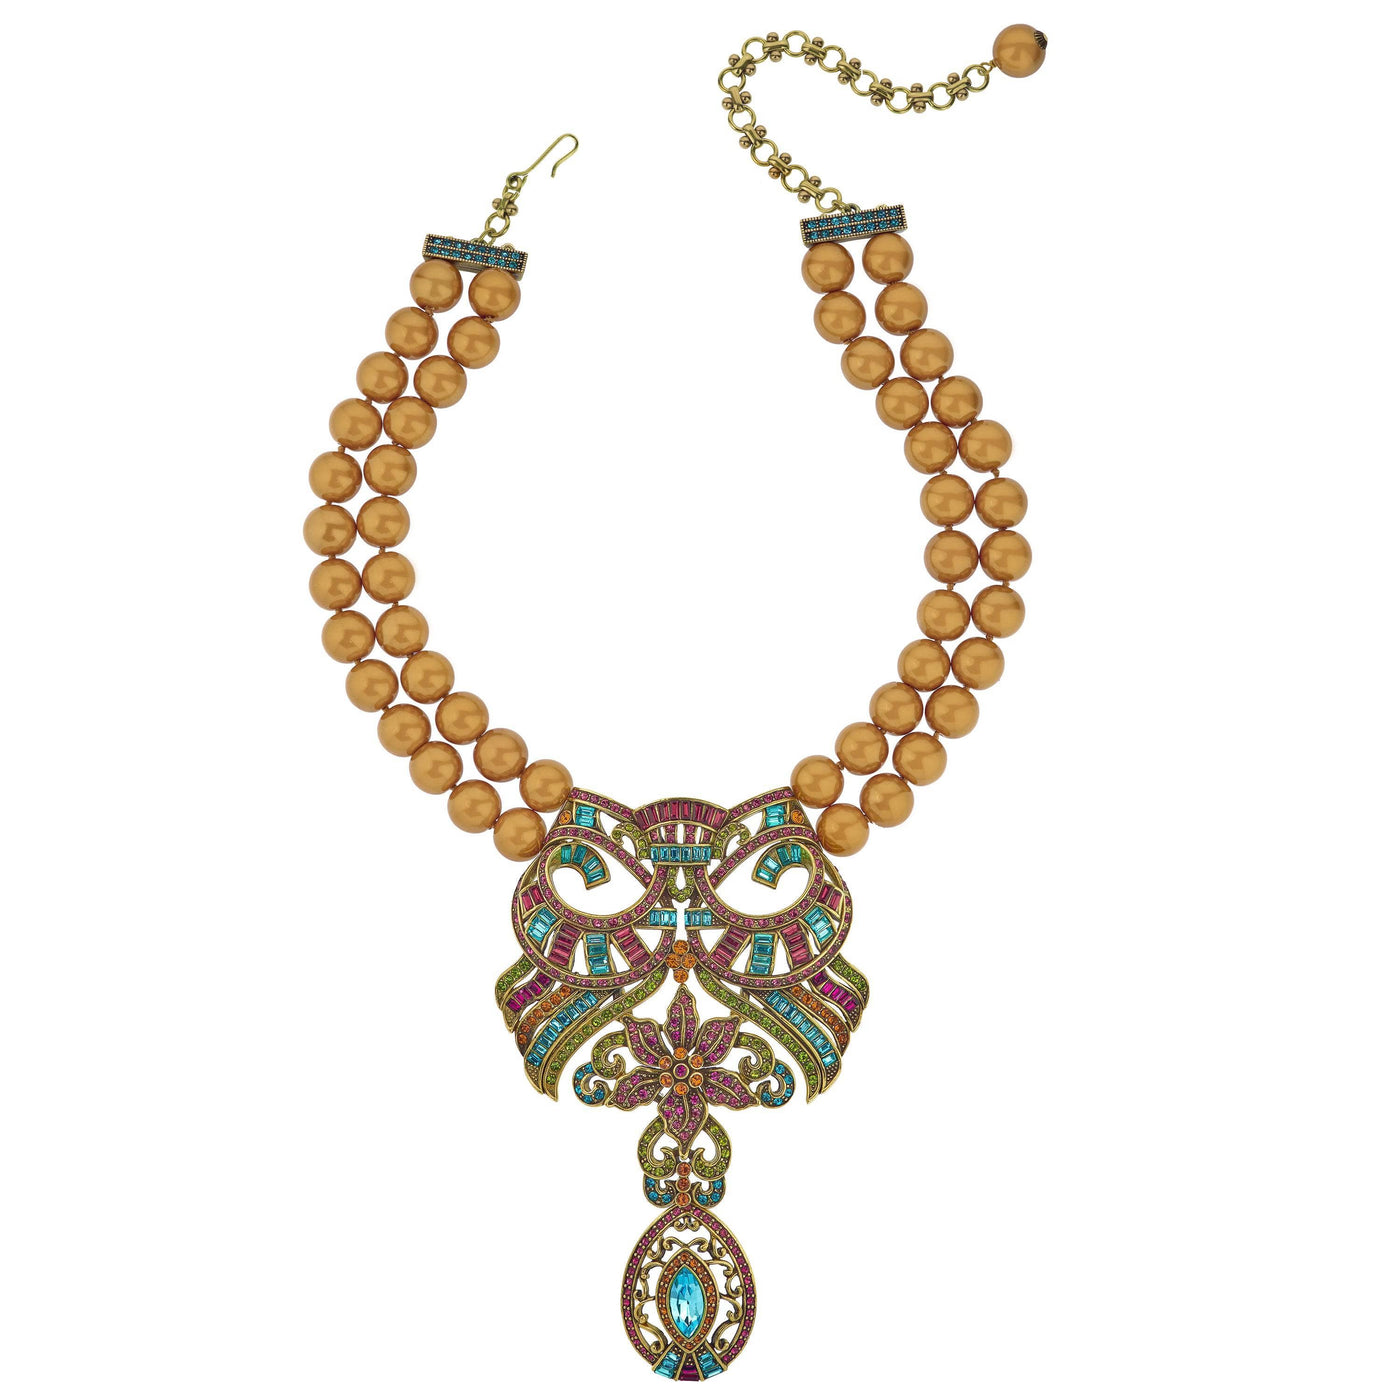 Heidi Daus®"Esmeralda" Beaded Crystal Floral Necklace